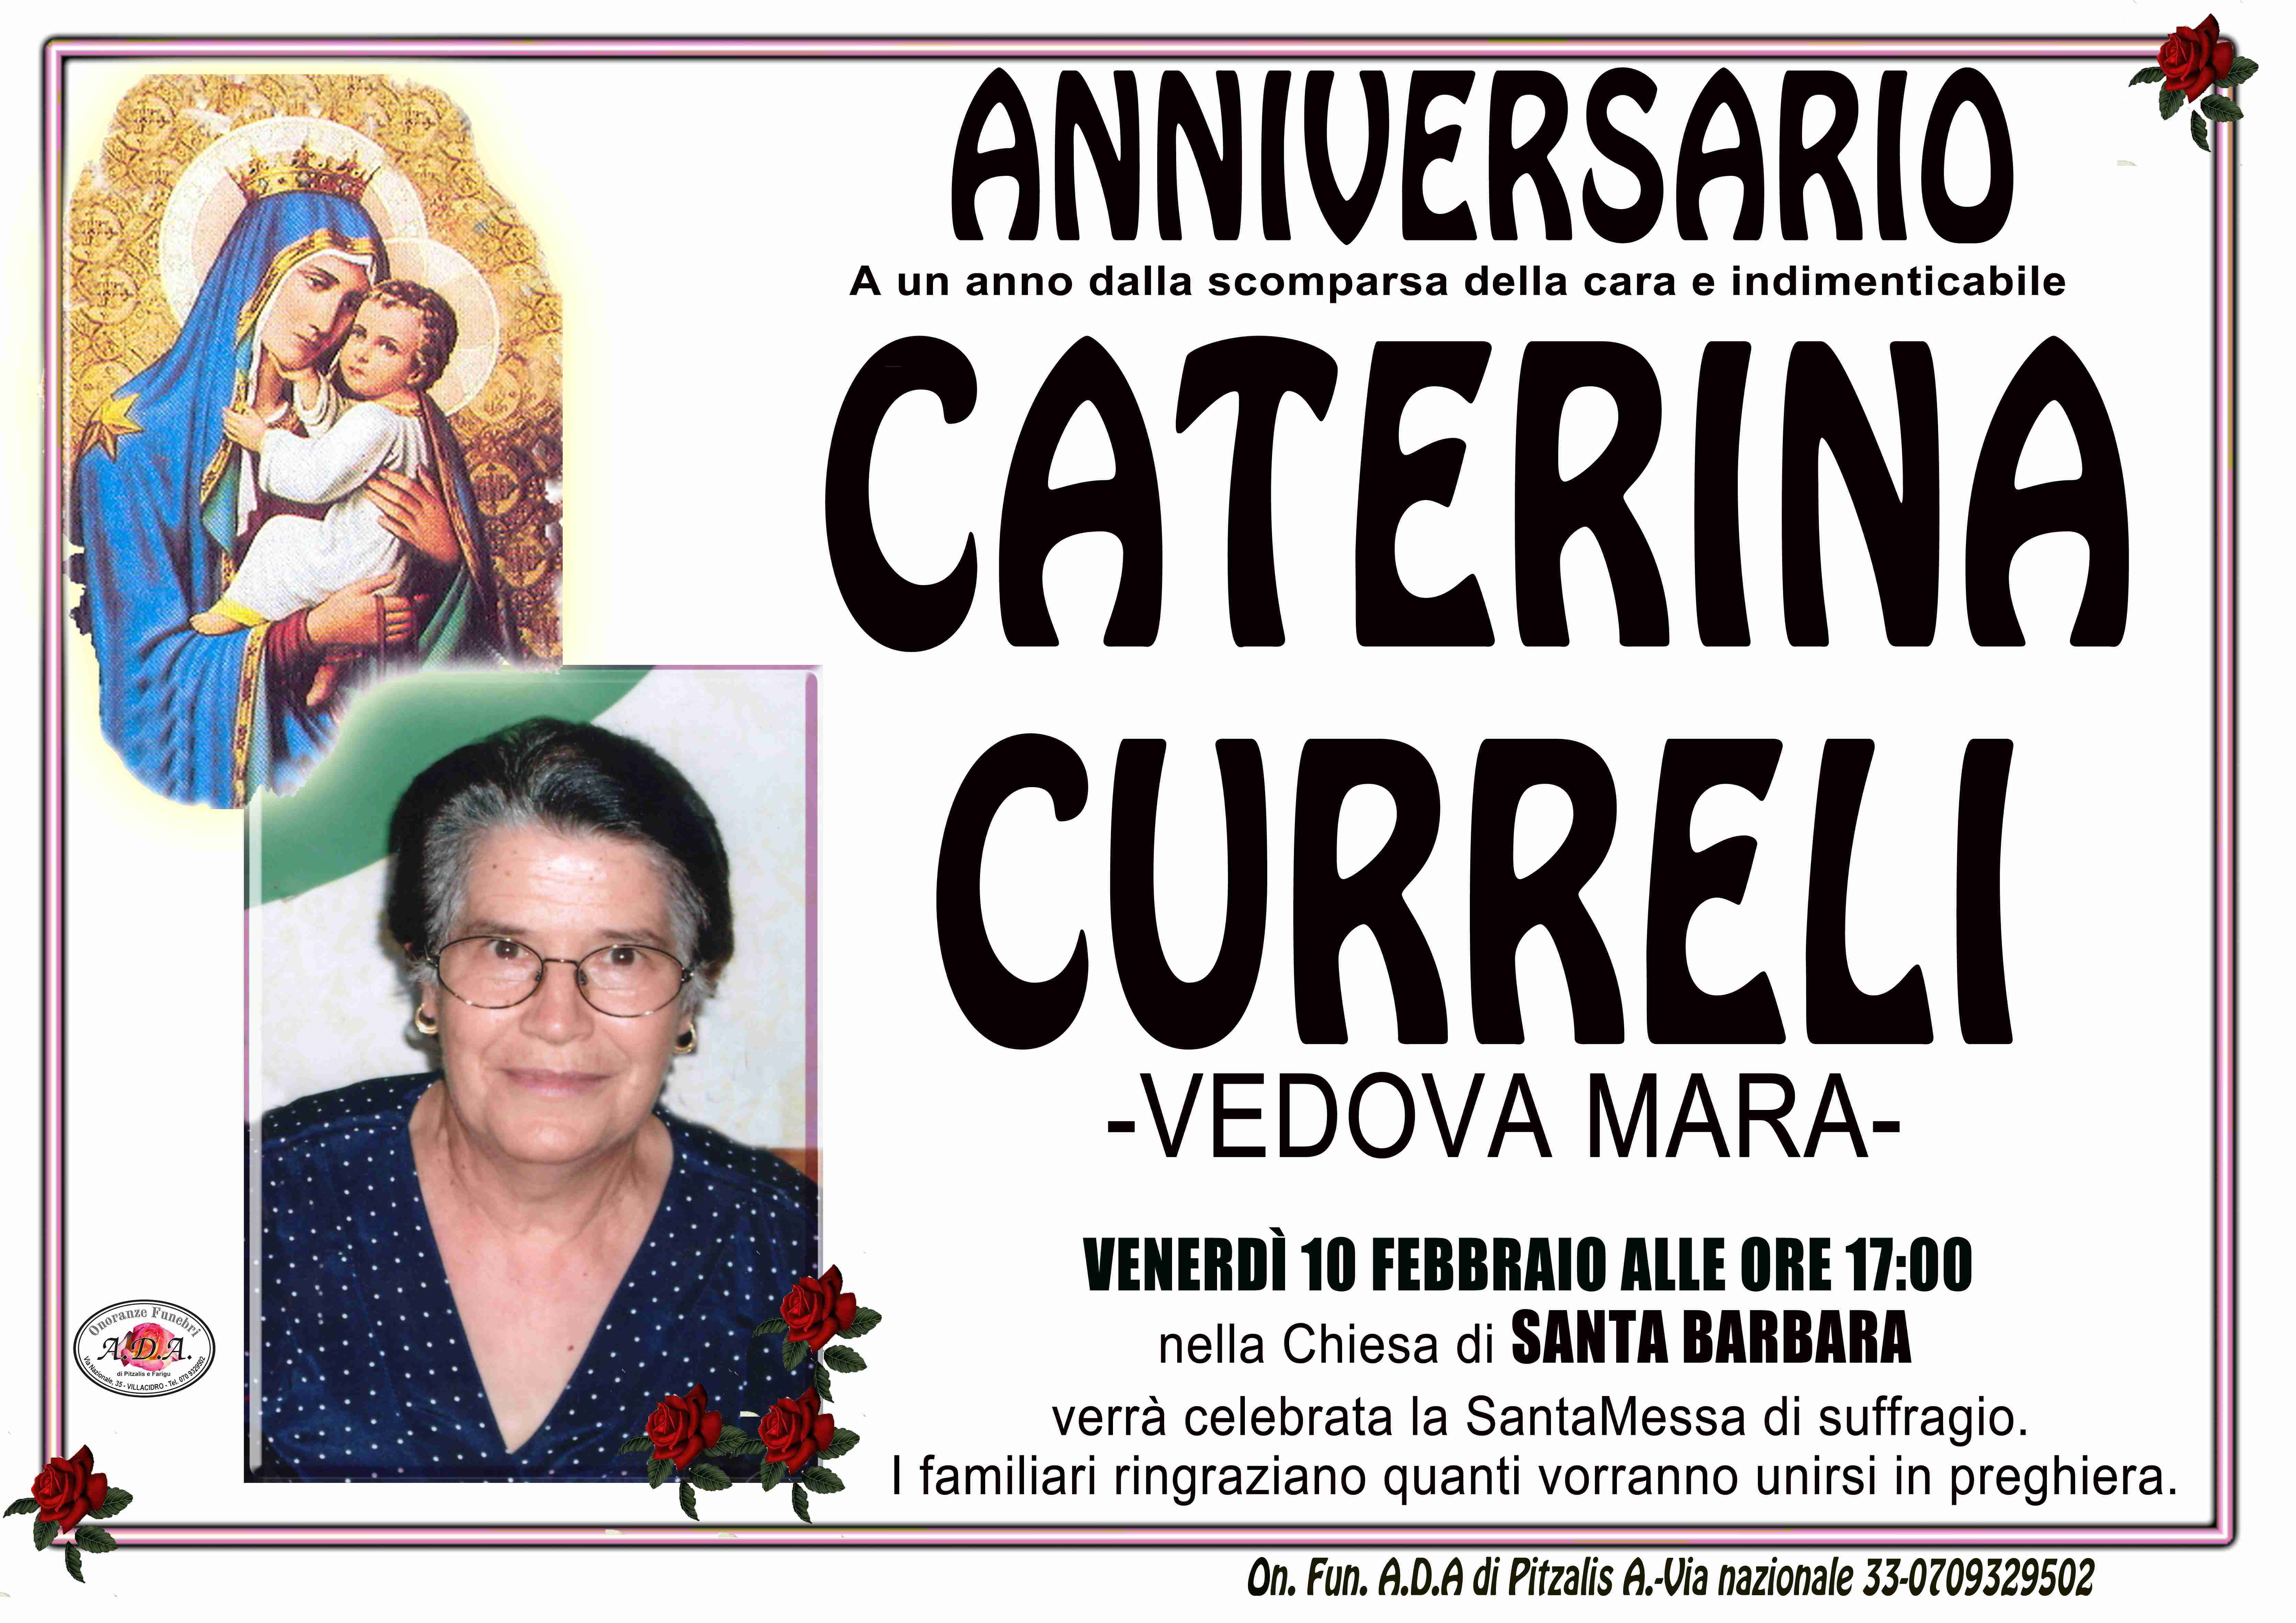 Caterina Curreli